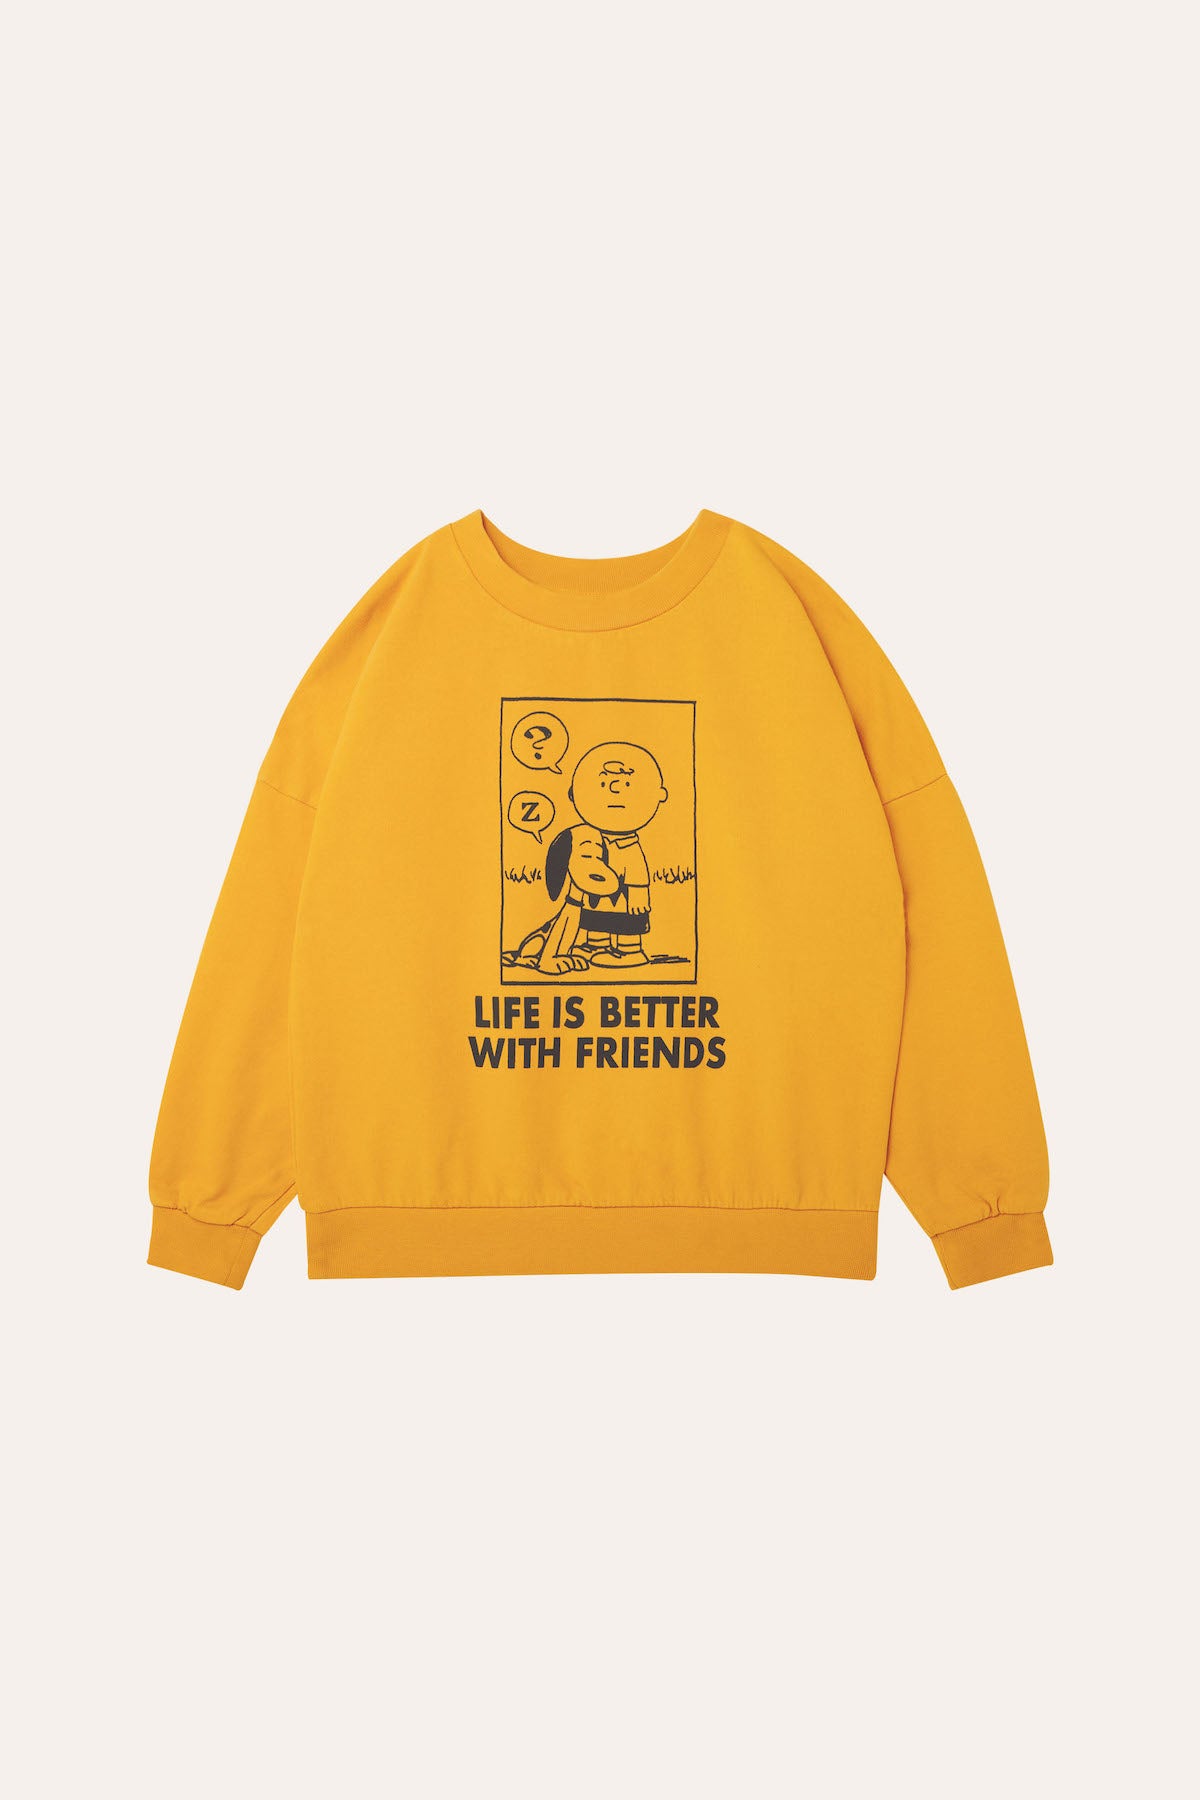 The Campamento Snoopy & Charlie Brown Oversized Kids Sweatshirt - Yellow